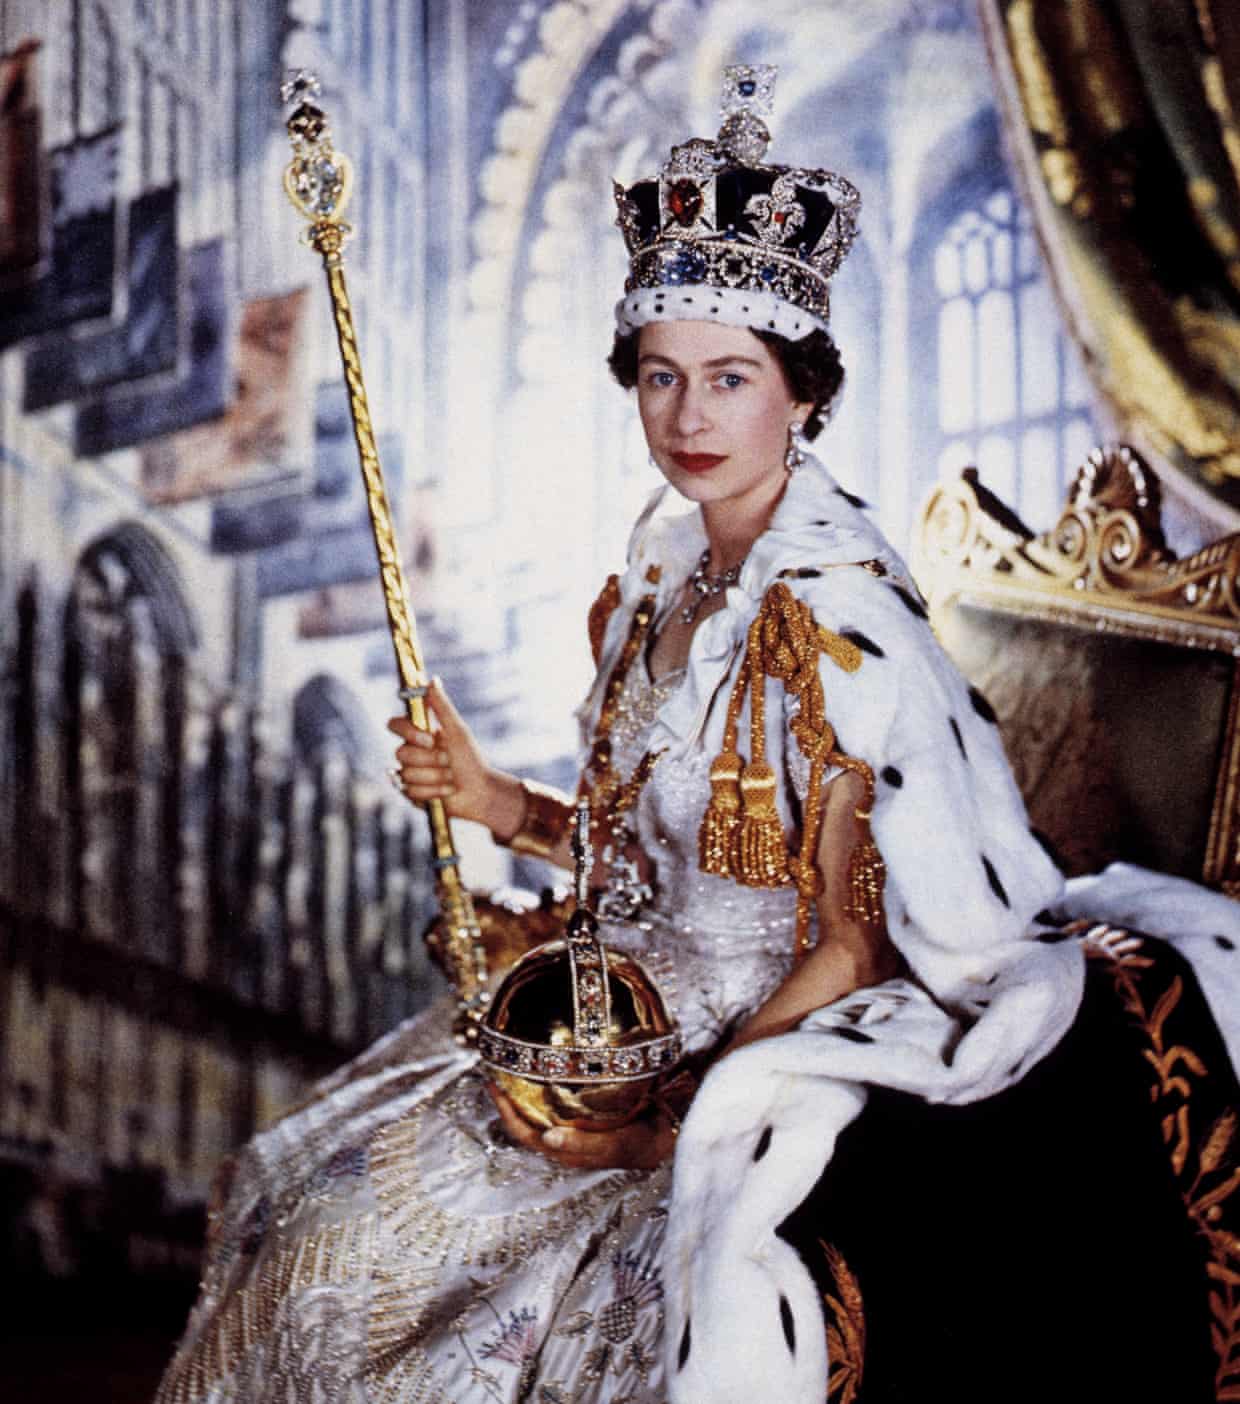 Queen Elizabeth II, Britain’s longest-reigning monarch, dies aged 96 (theguardian.com)